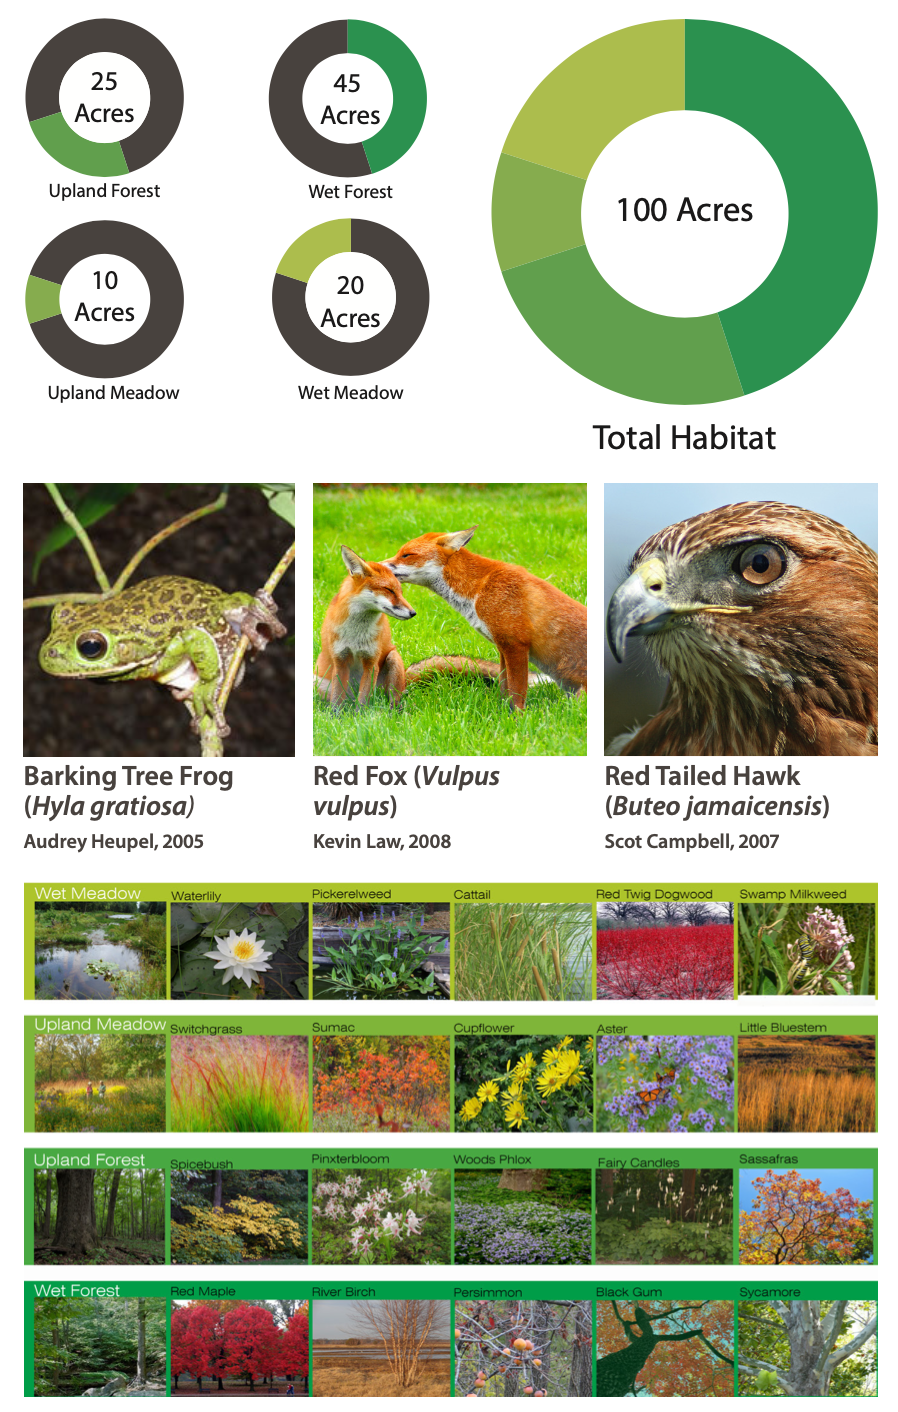 Habitat Restoration and Representative Species